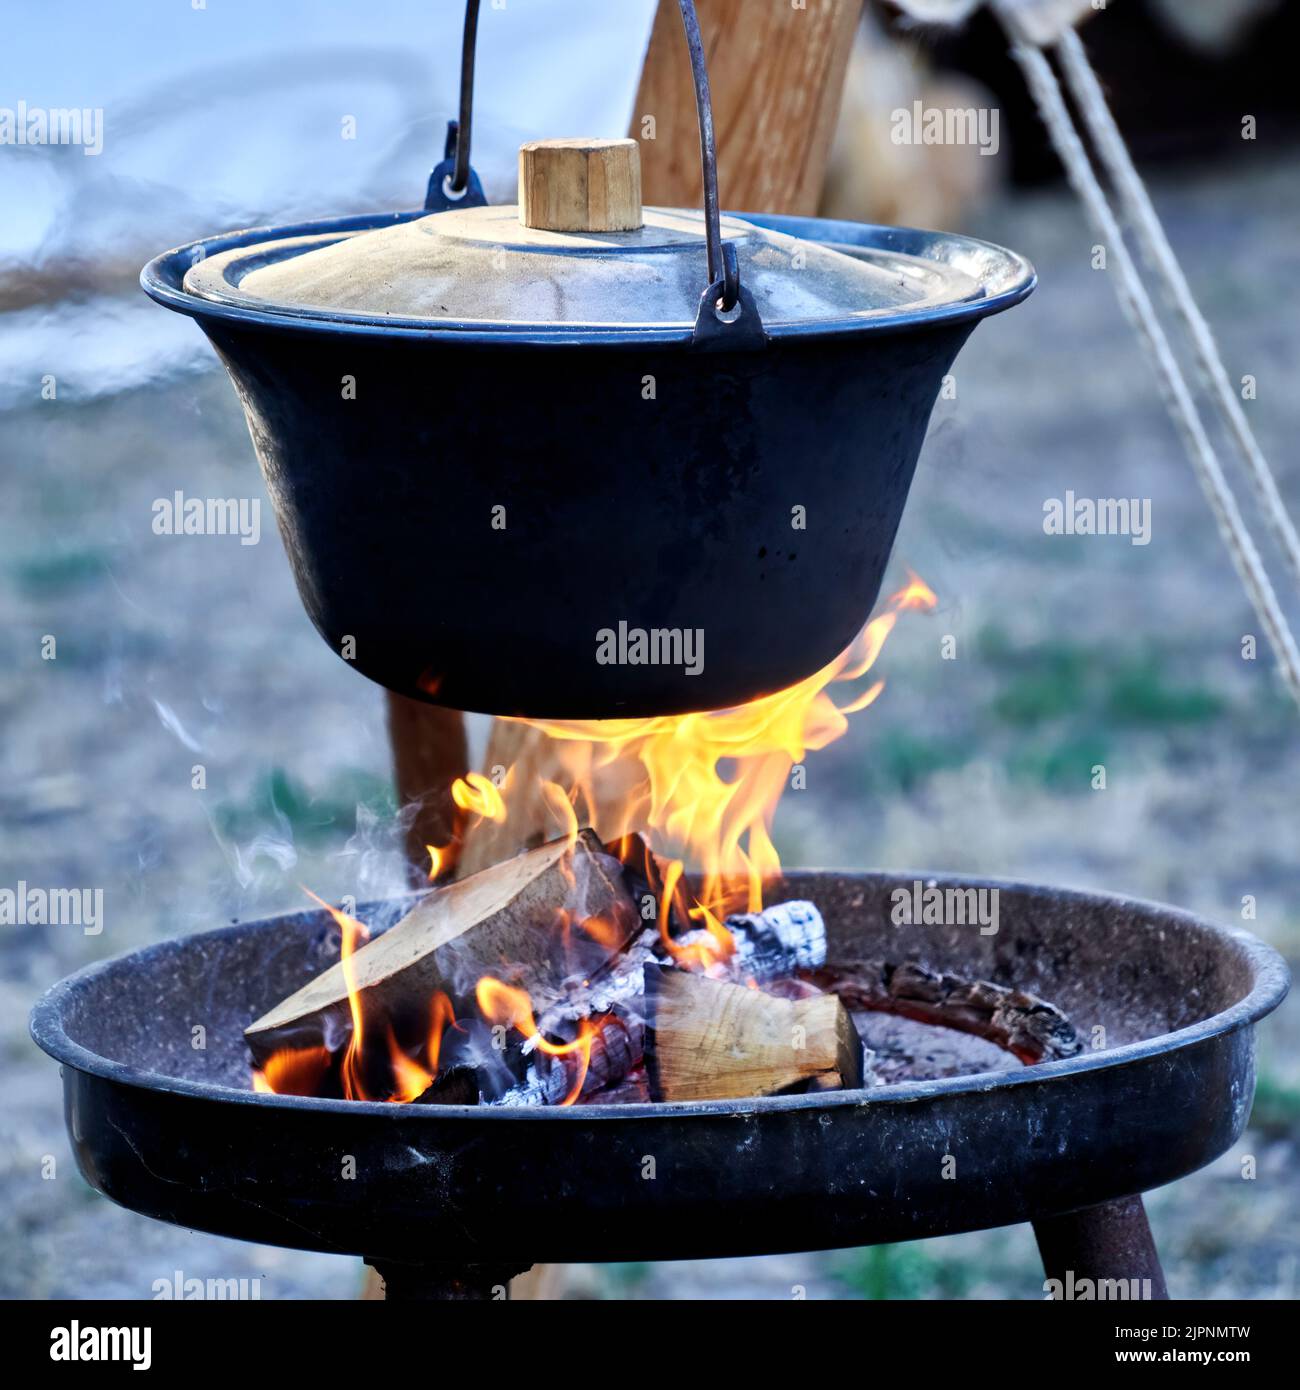 https://c8.alamy.com/comp/2JPNMTW/cast-iron-pot-with-primitive-lid-hangs-over-open-fireplace-with-burning-logs-2JPNMTW.jpg